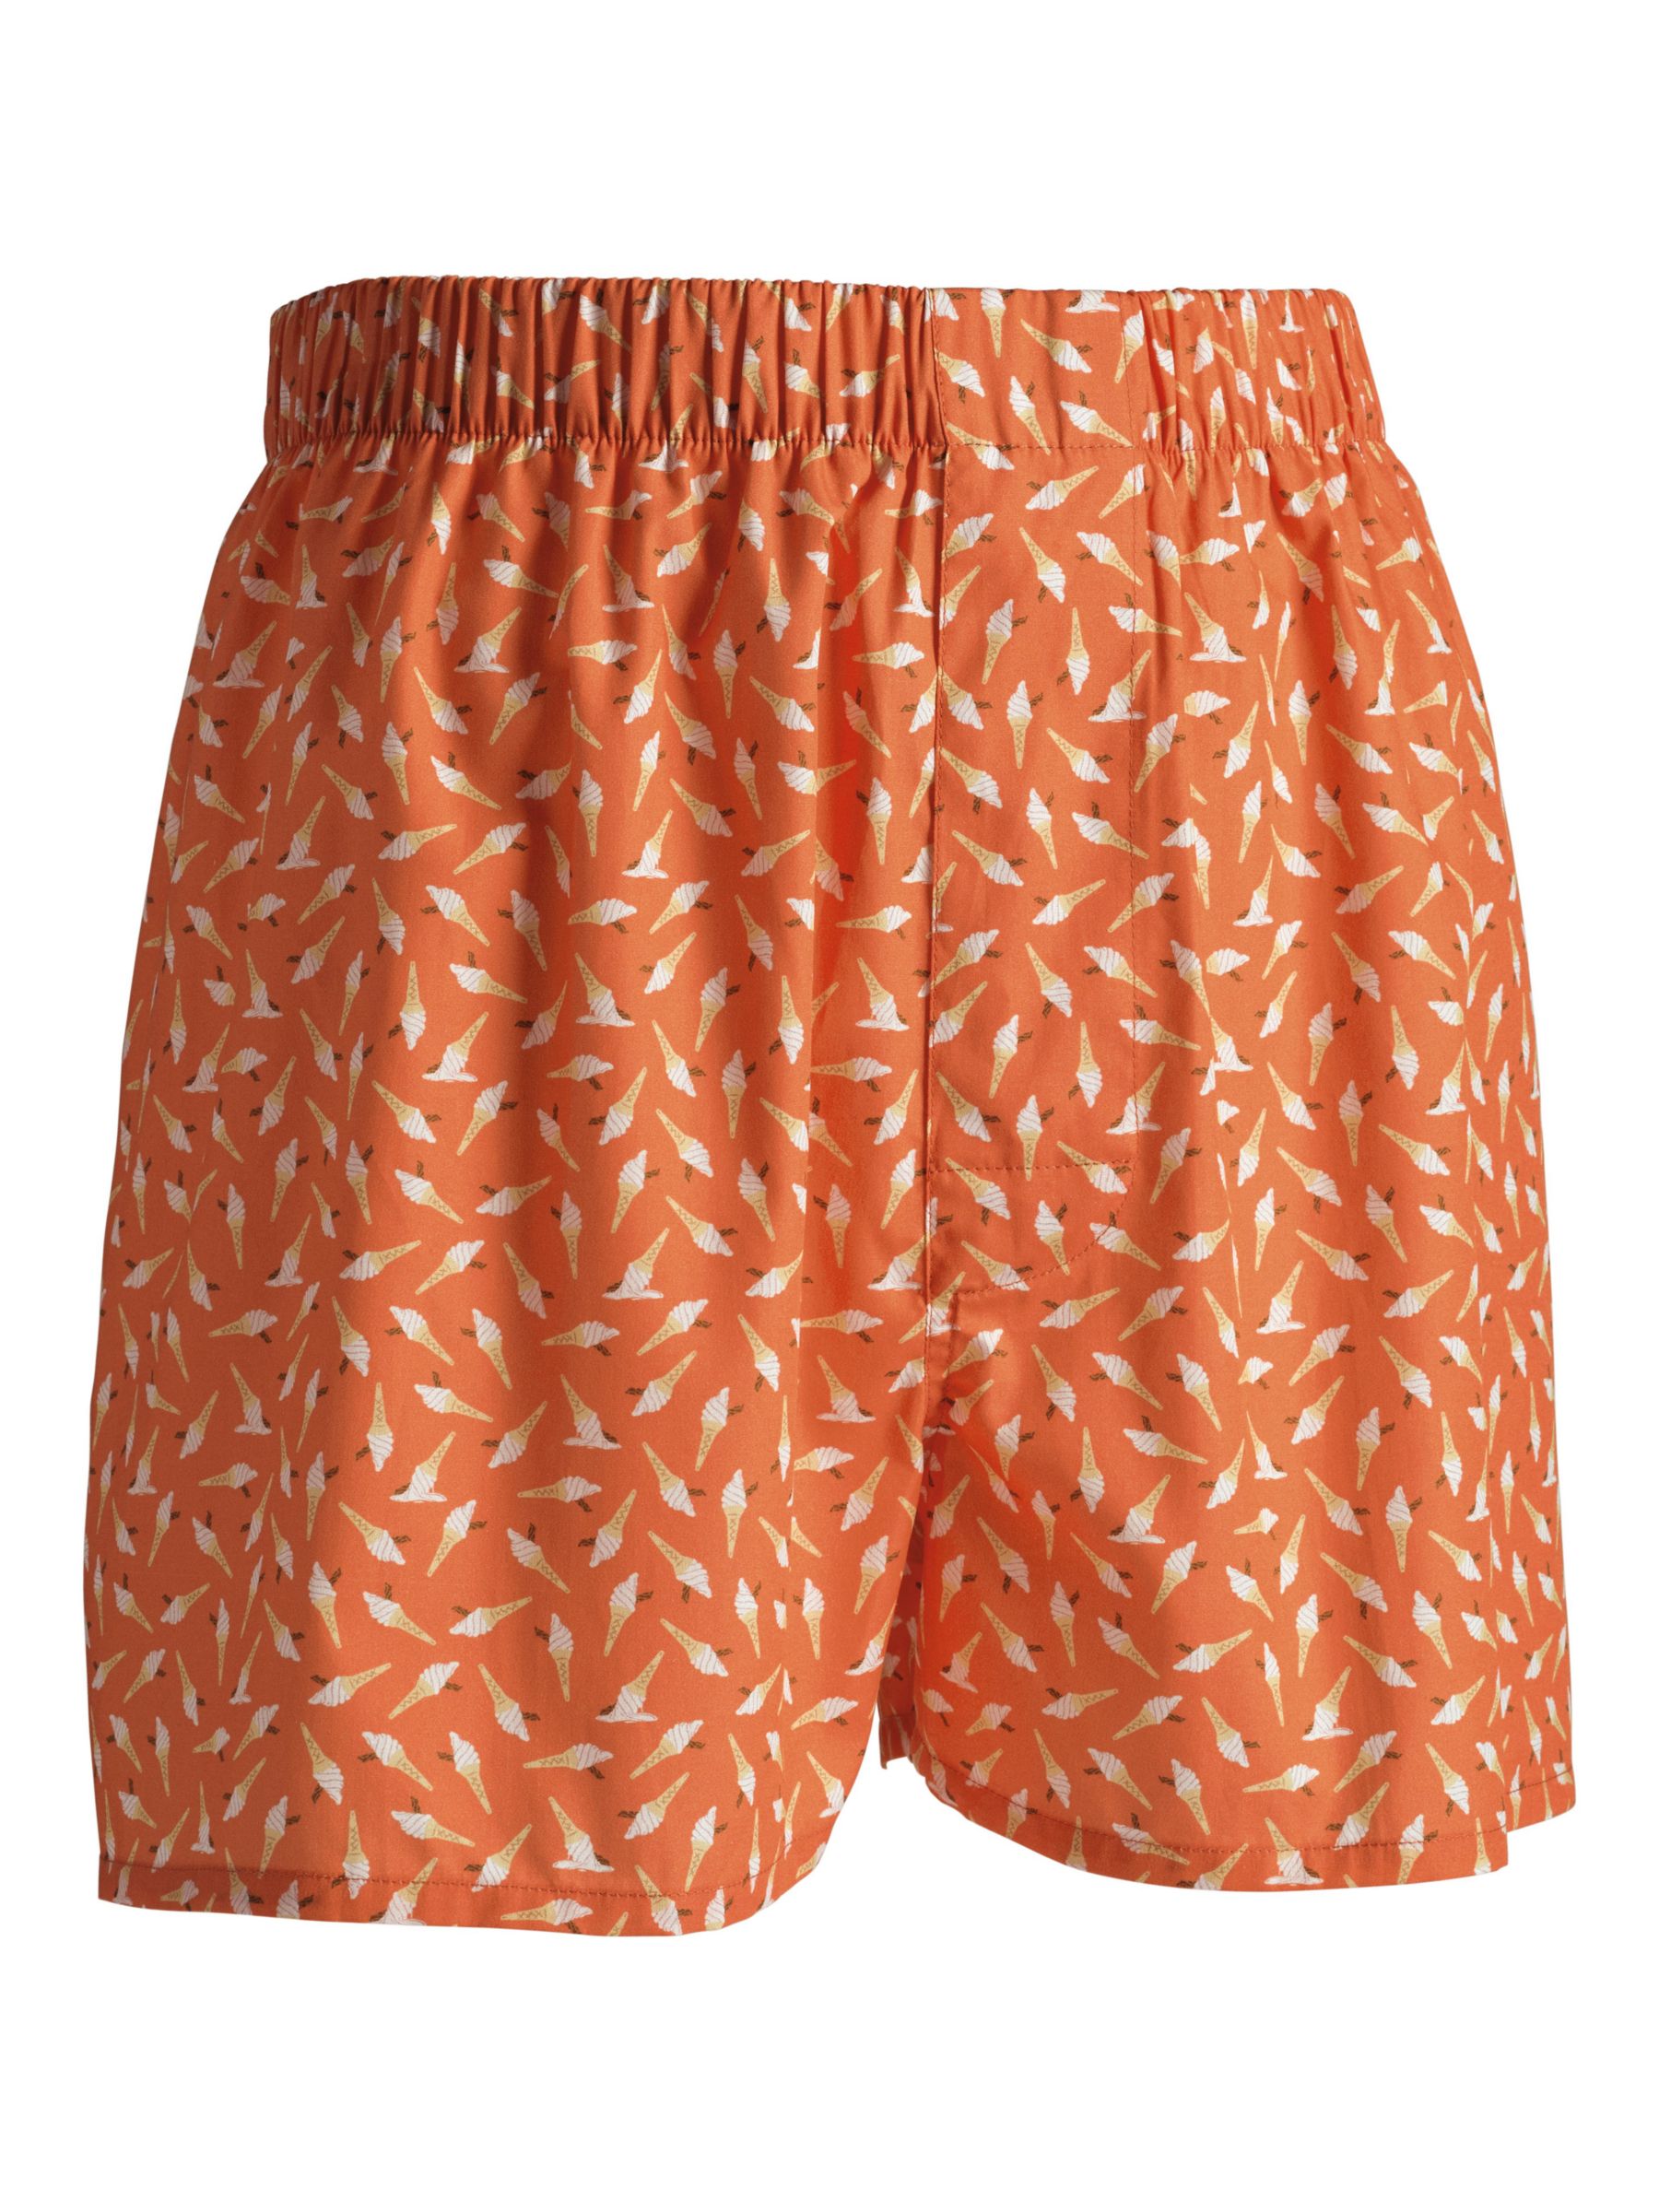 Charles Tyrwhitt Ice Cream Print Cotton Boxer Shorts, Orange, M